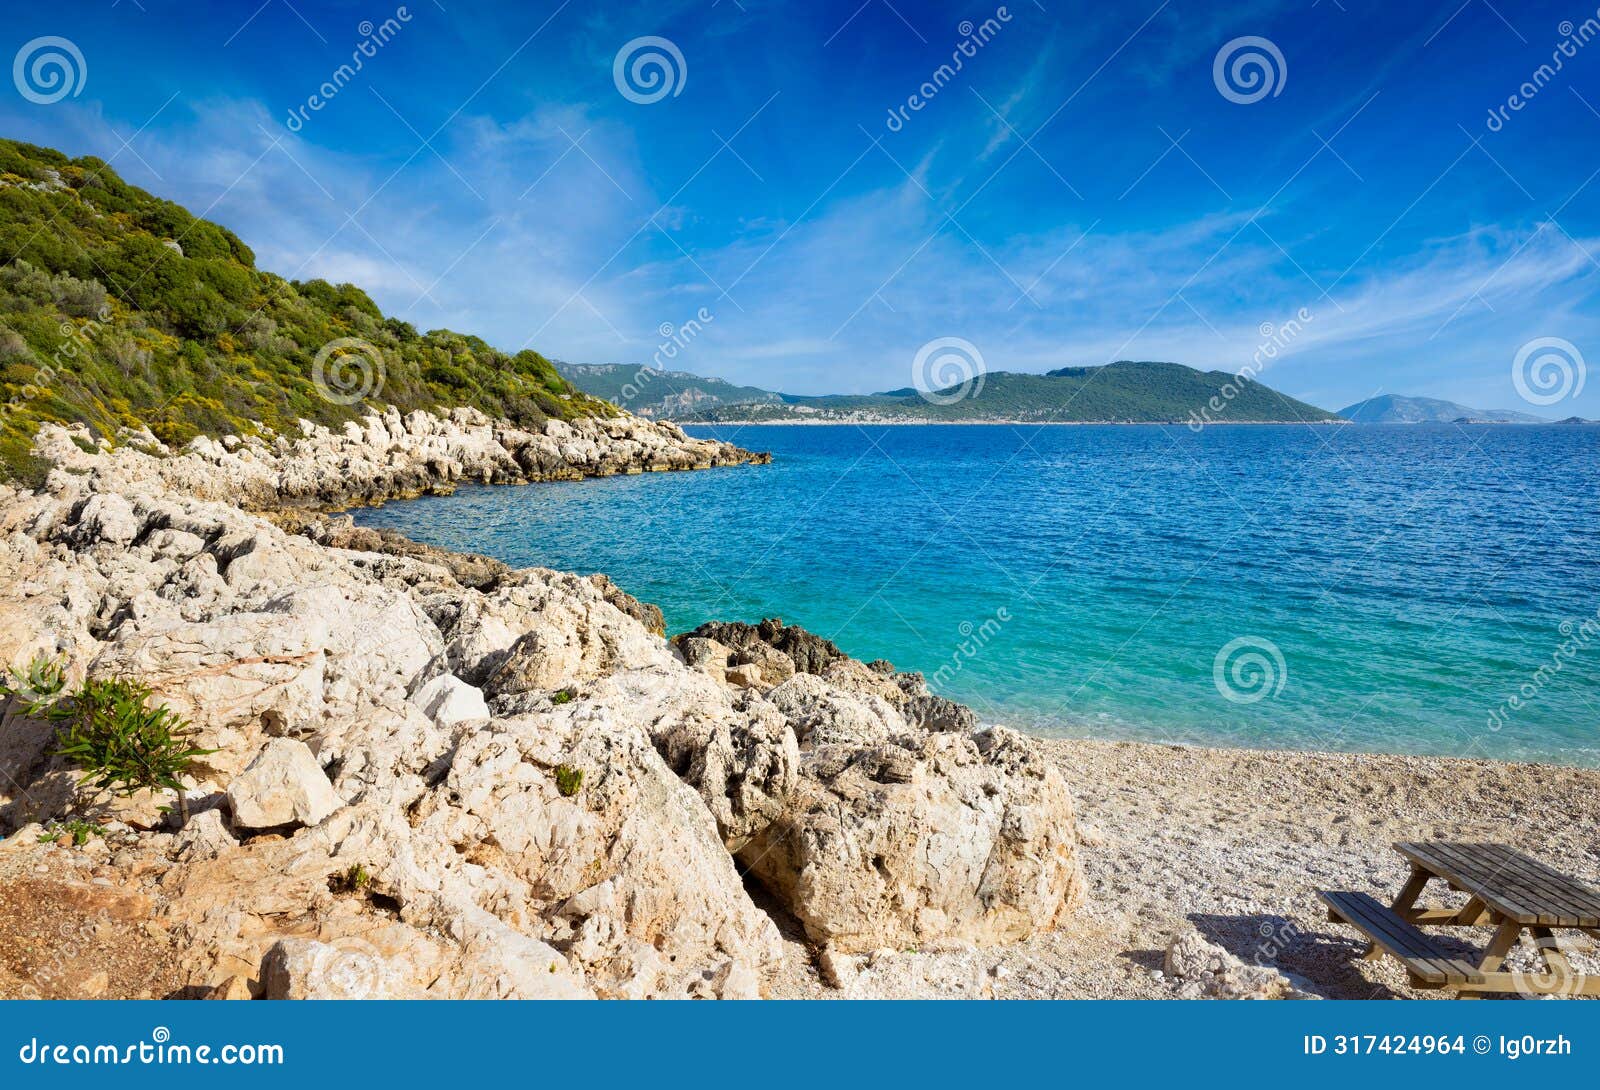 serene kas beach in antalya province of turkey with clear mediterranean sea